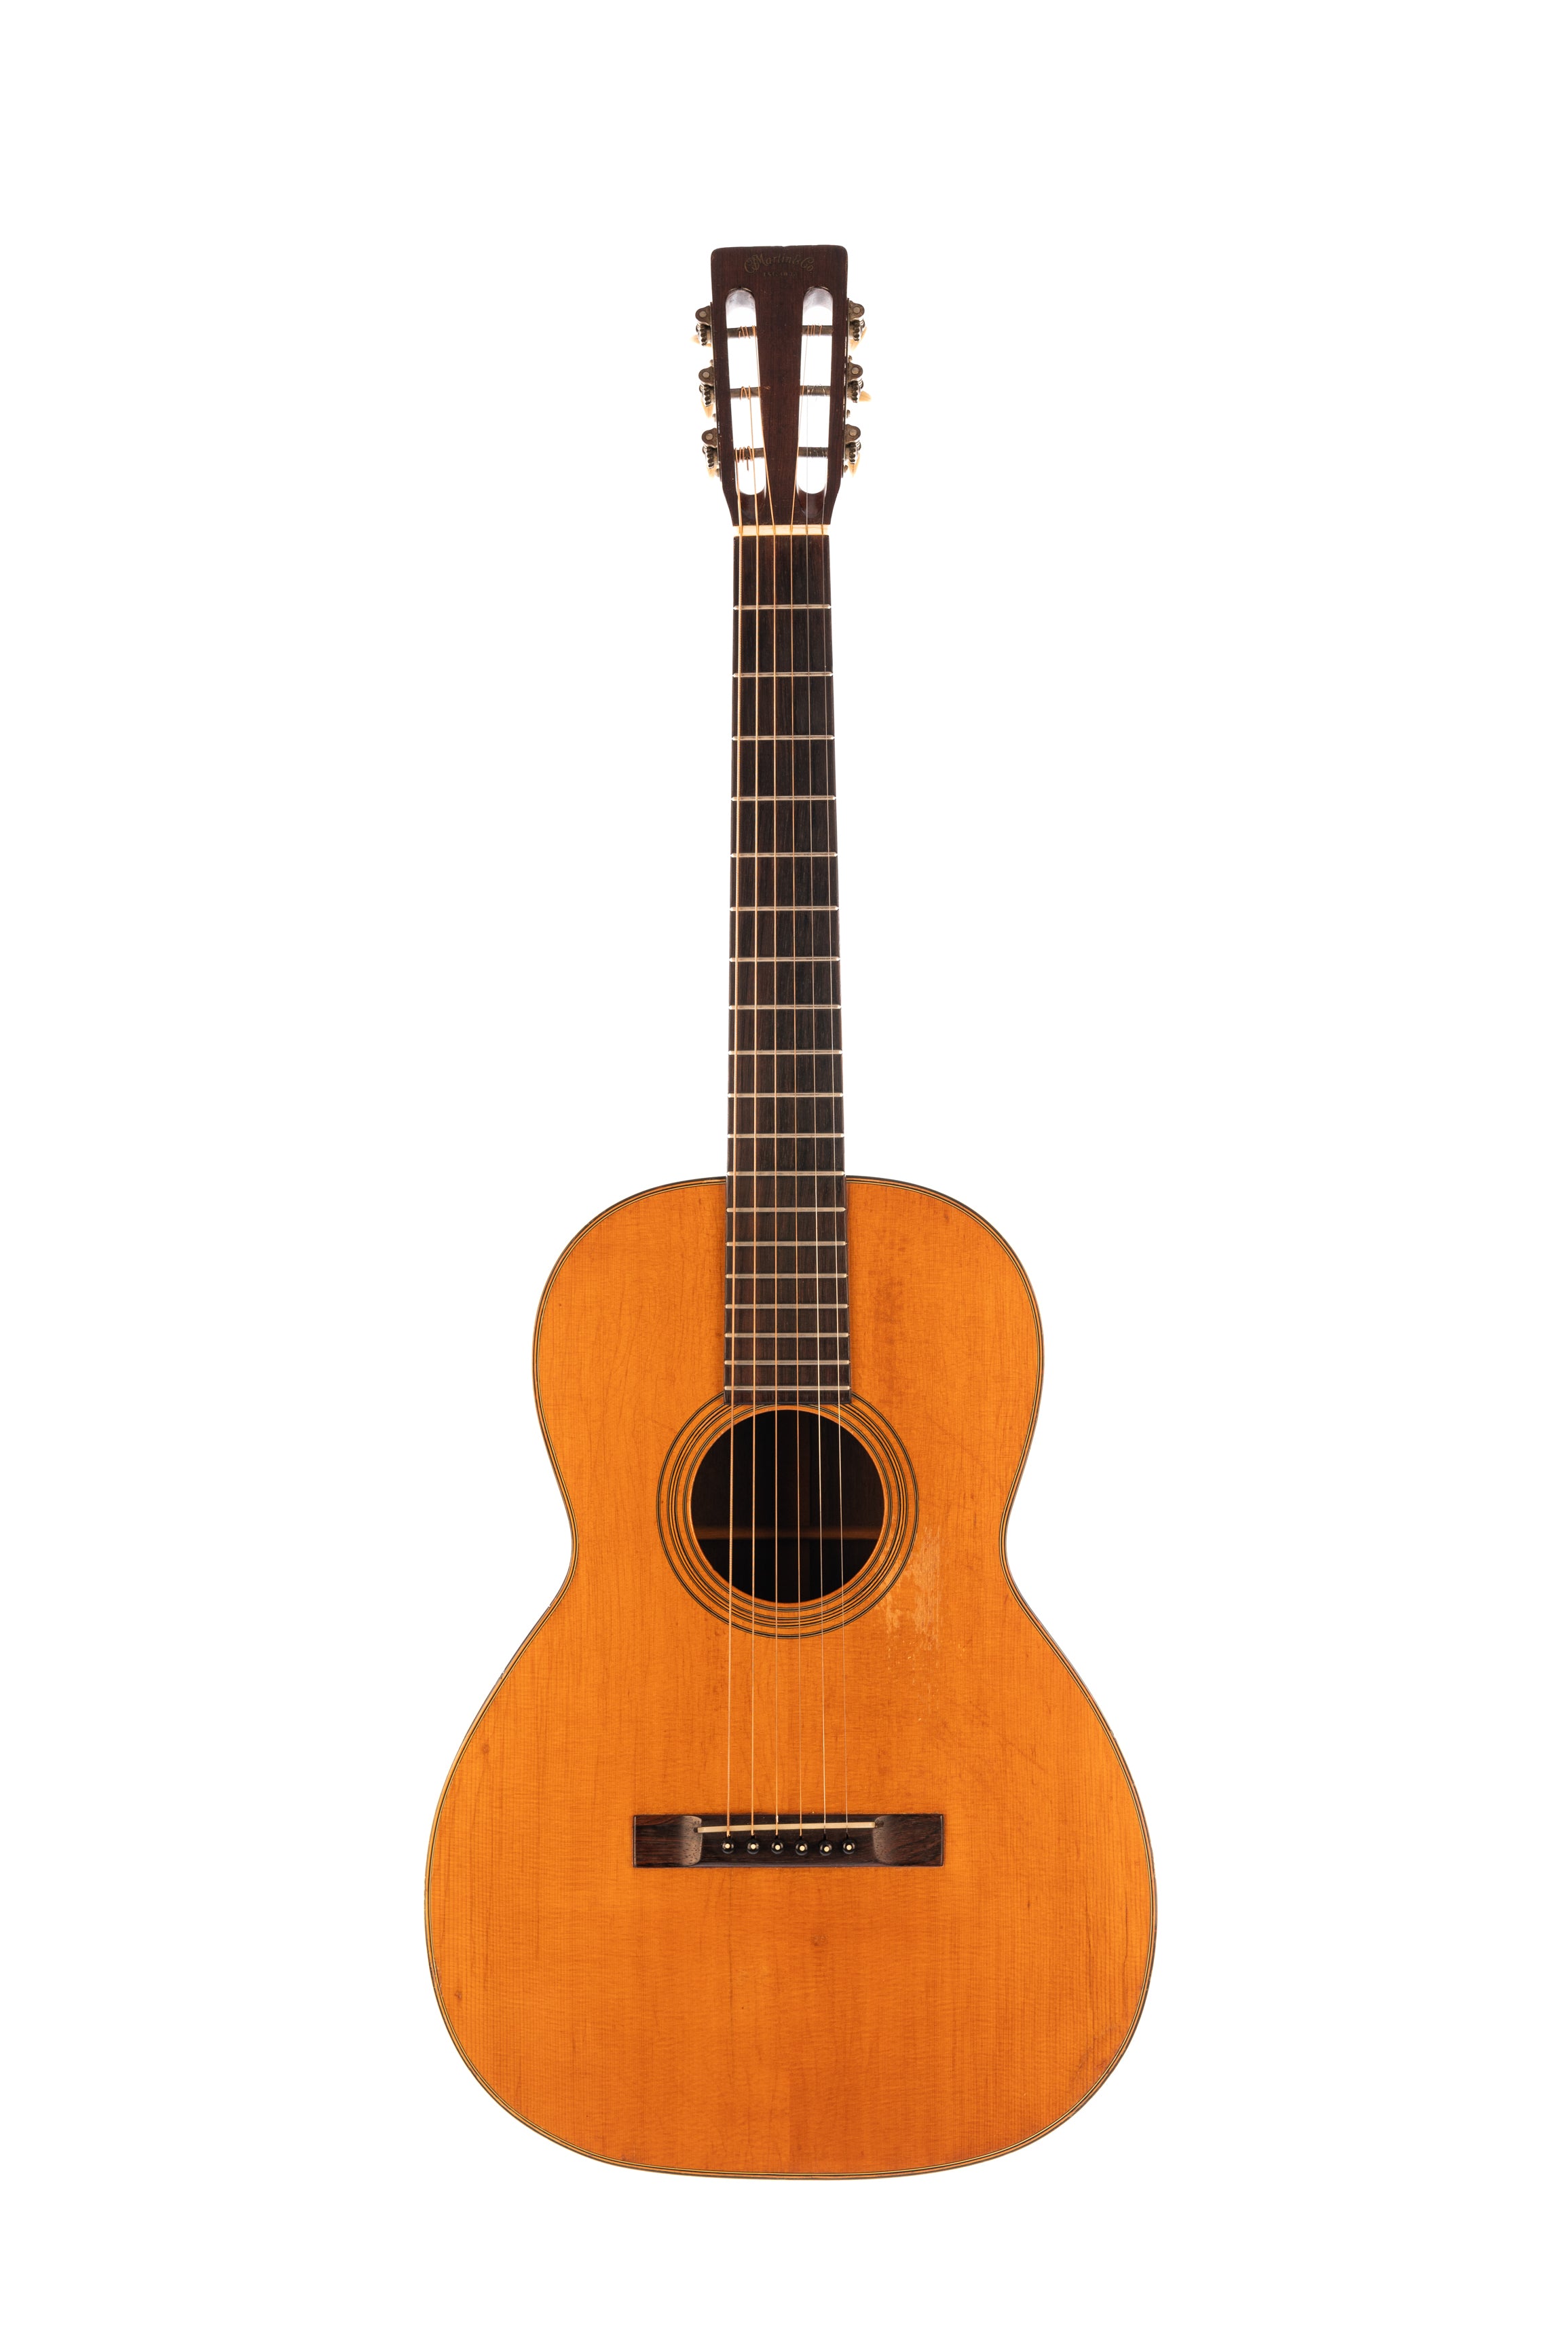 Martin 00-21NY New Yorker Acoustic Guitar